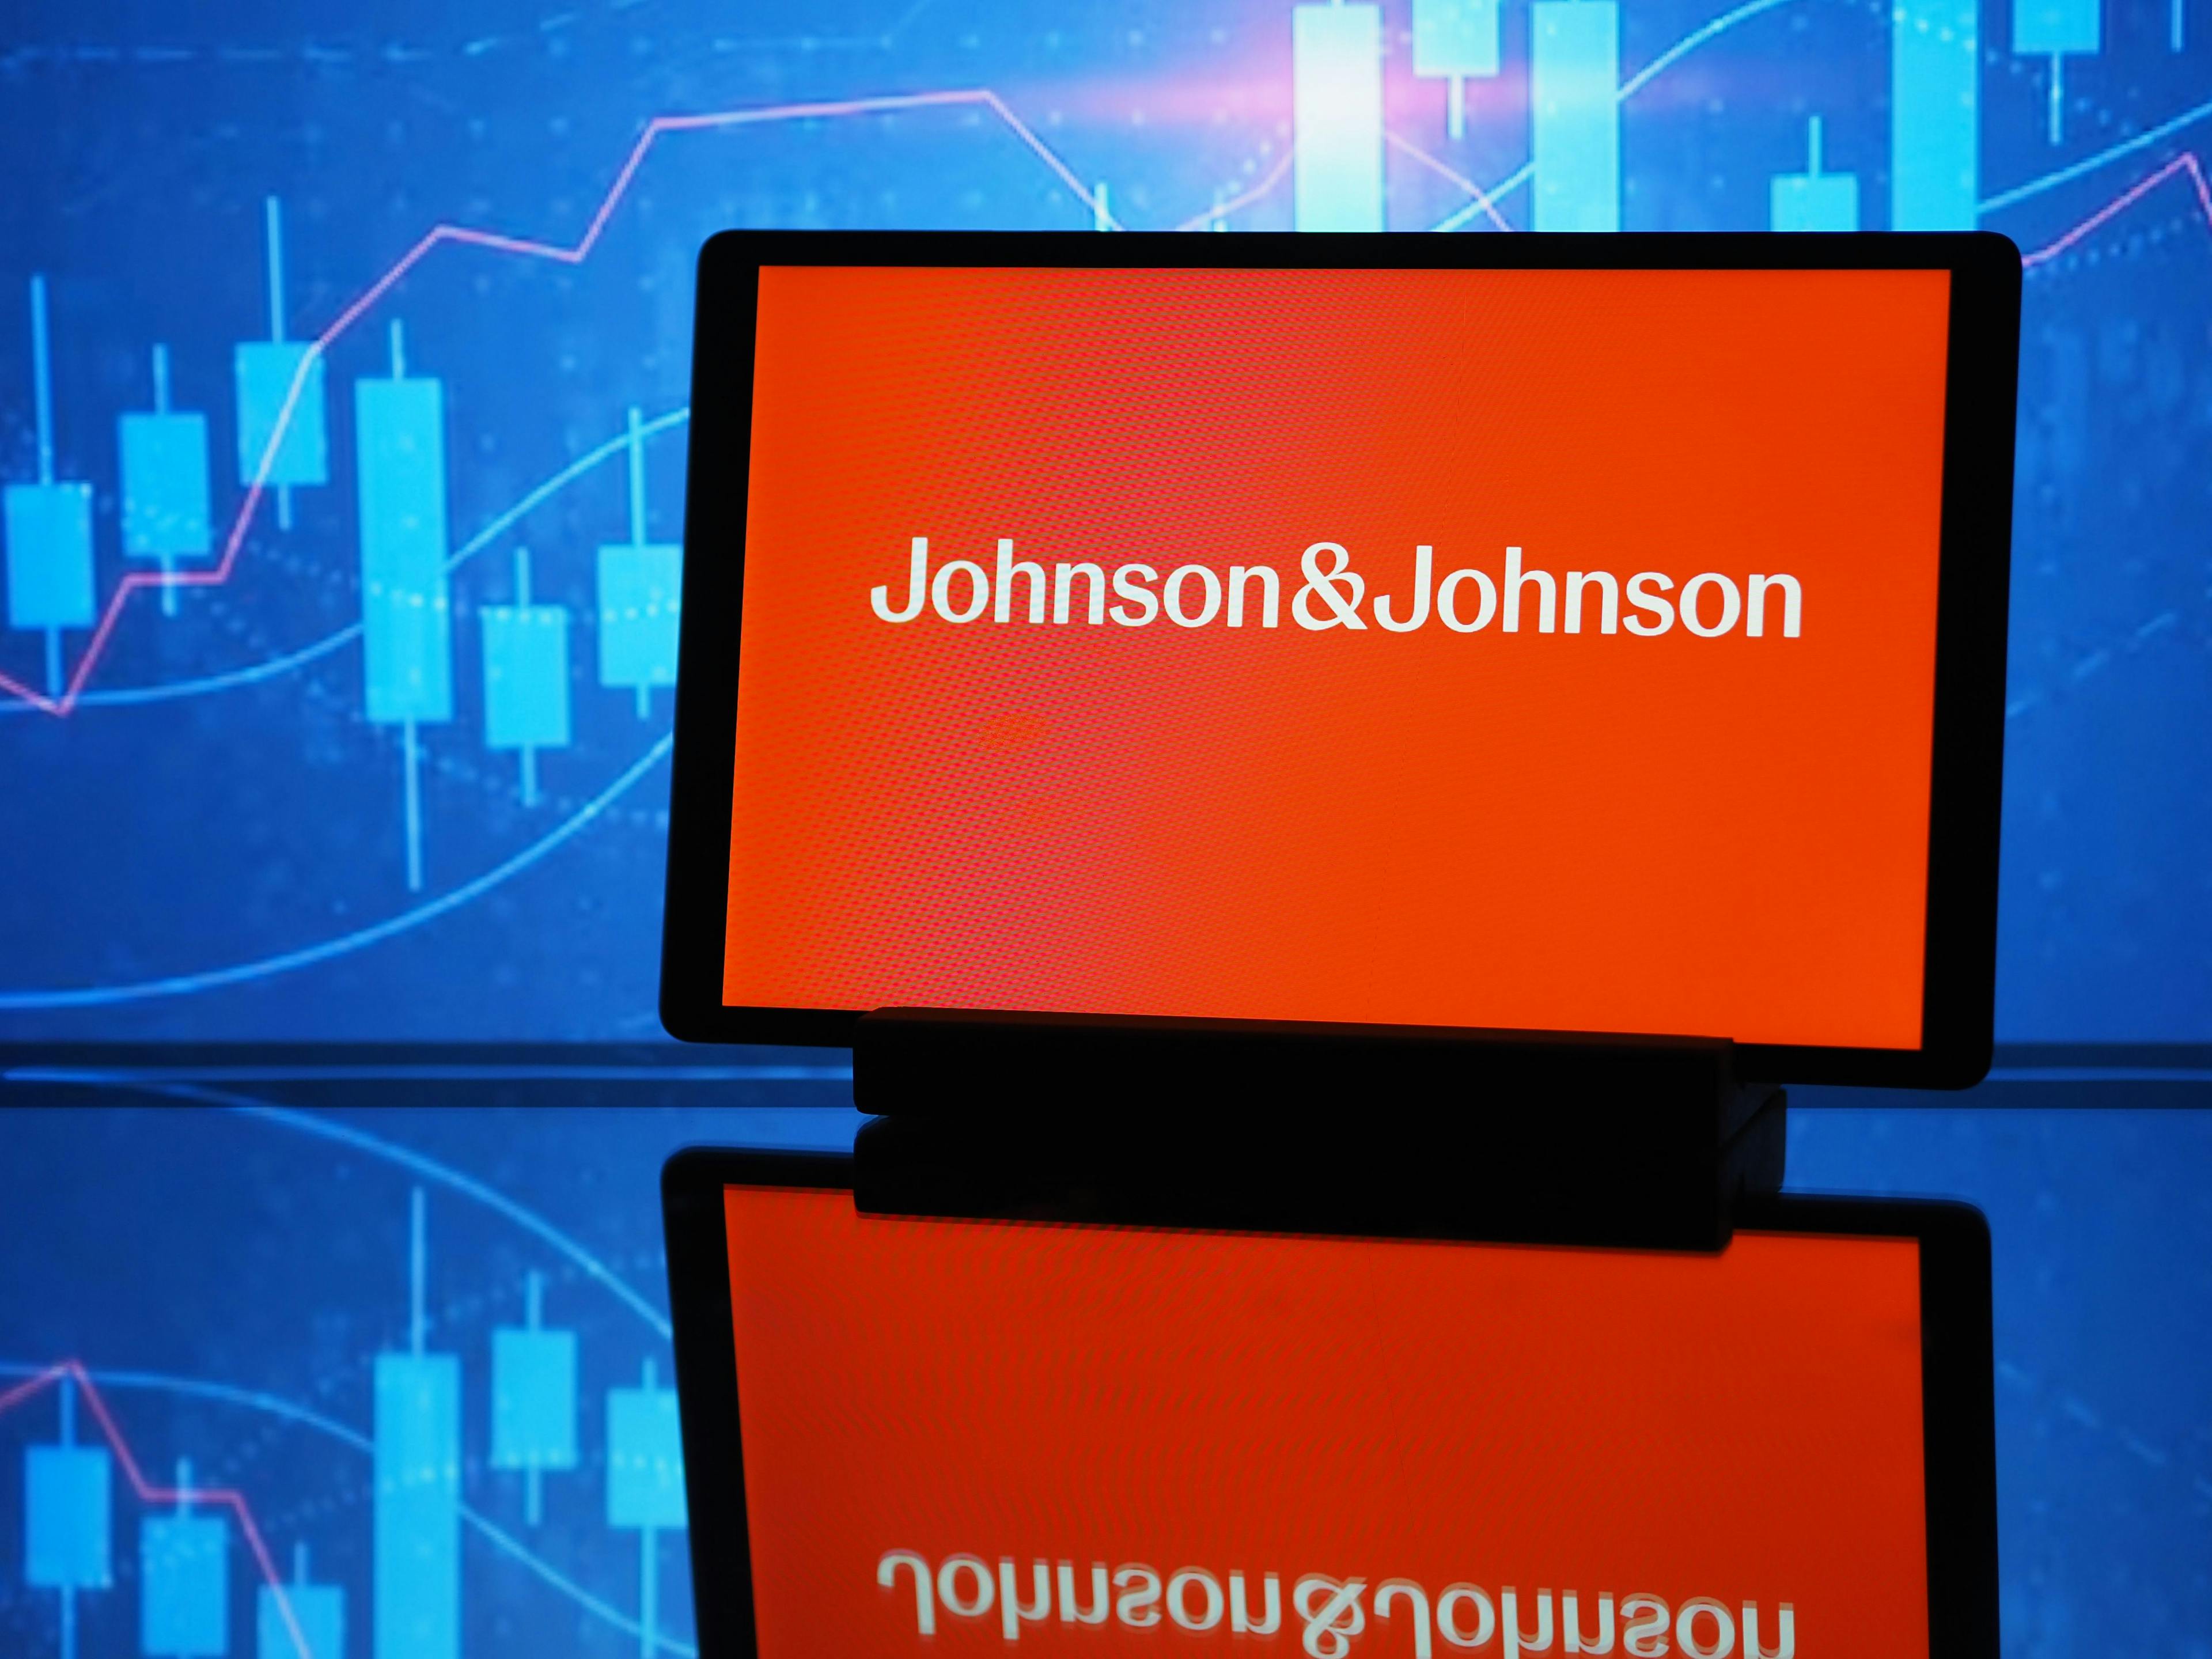 A flat screen with Johnson & Johnson's logo